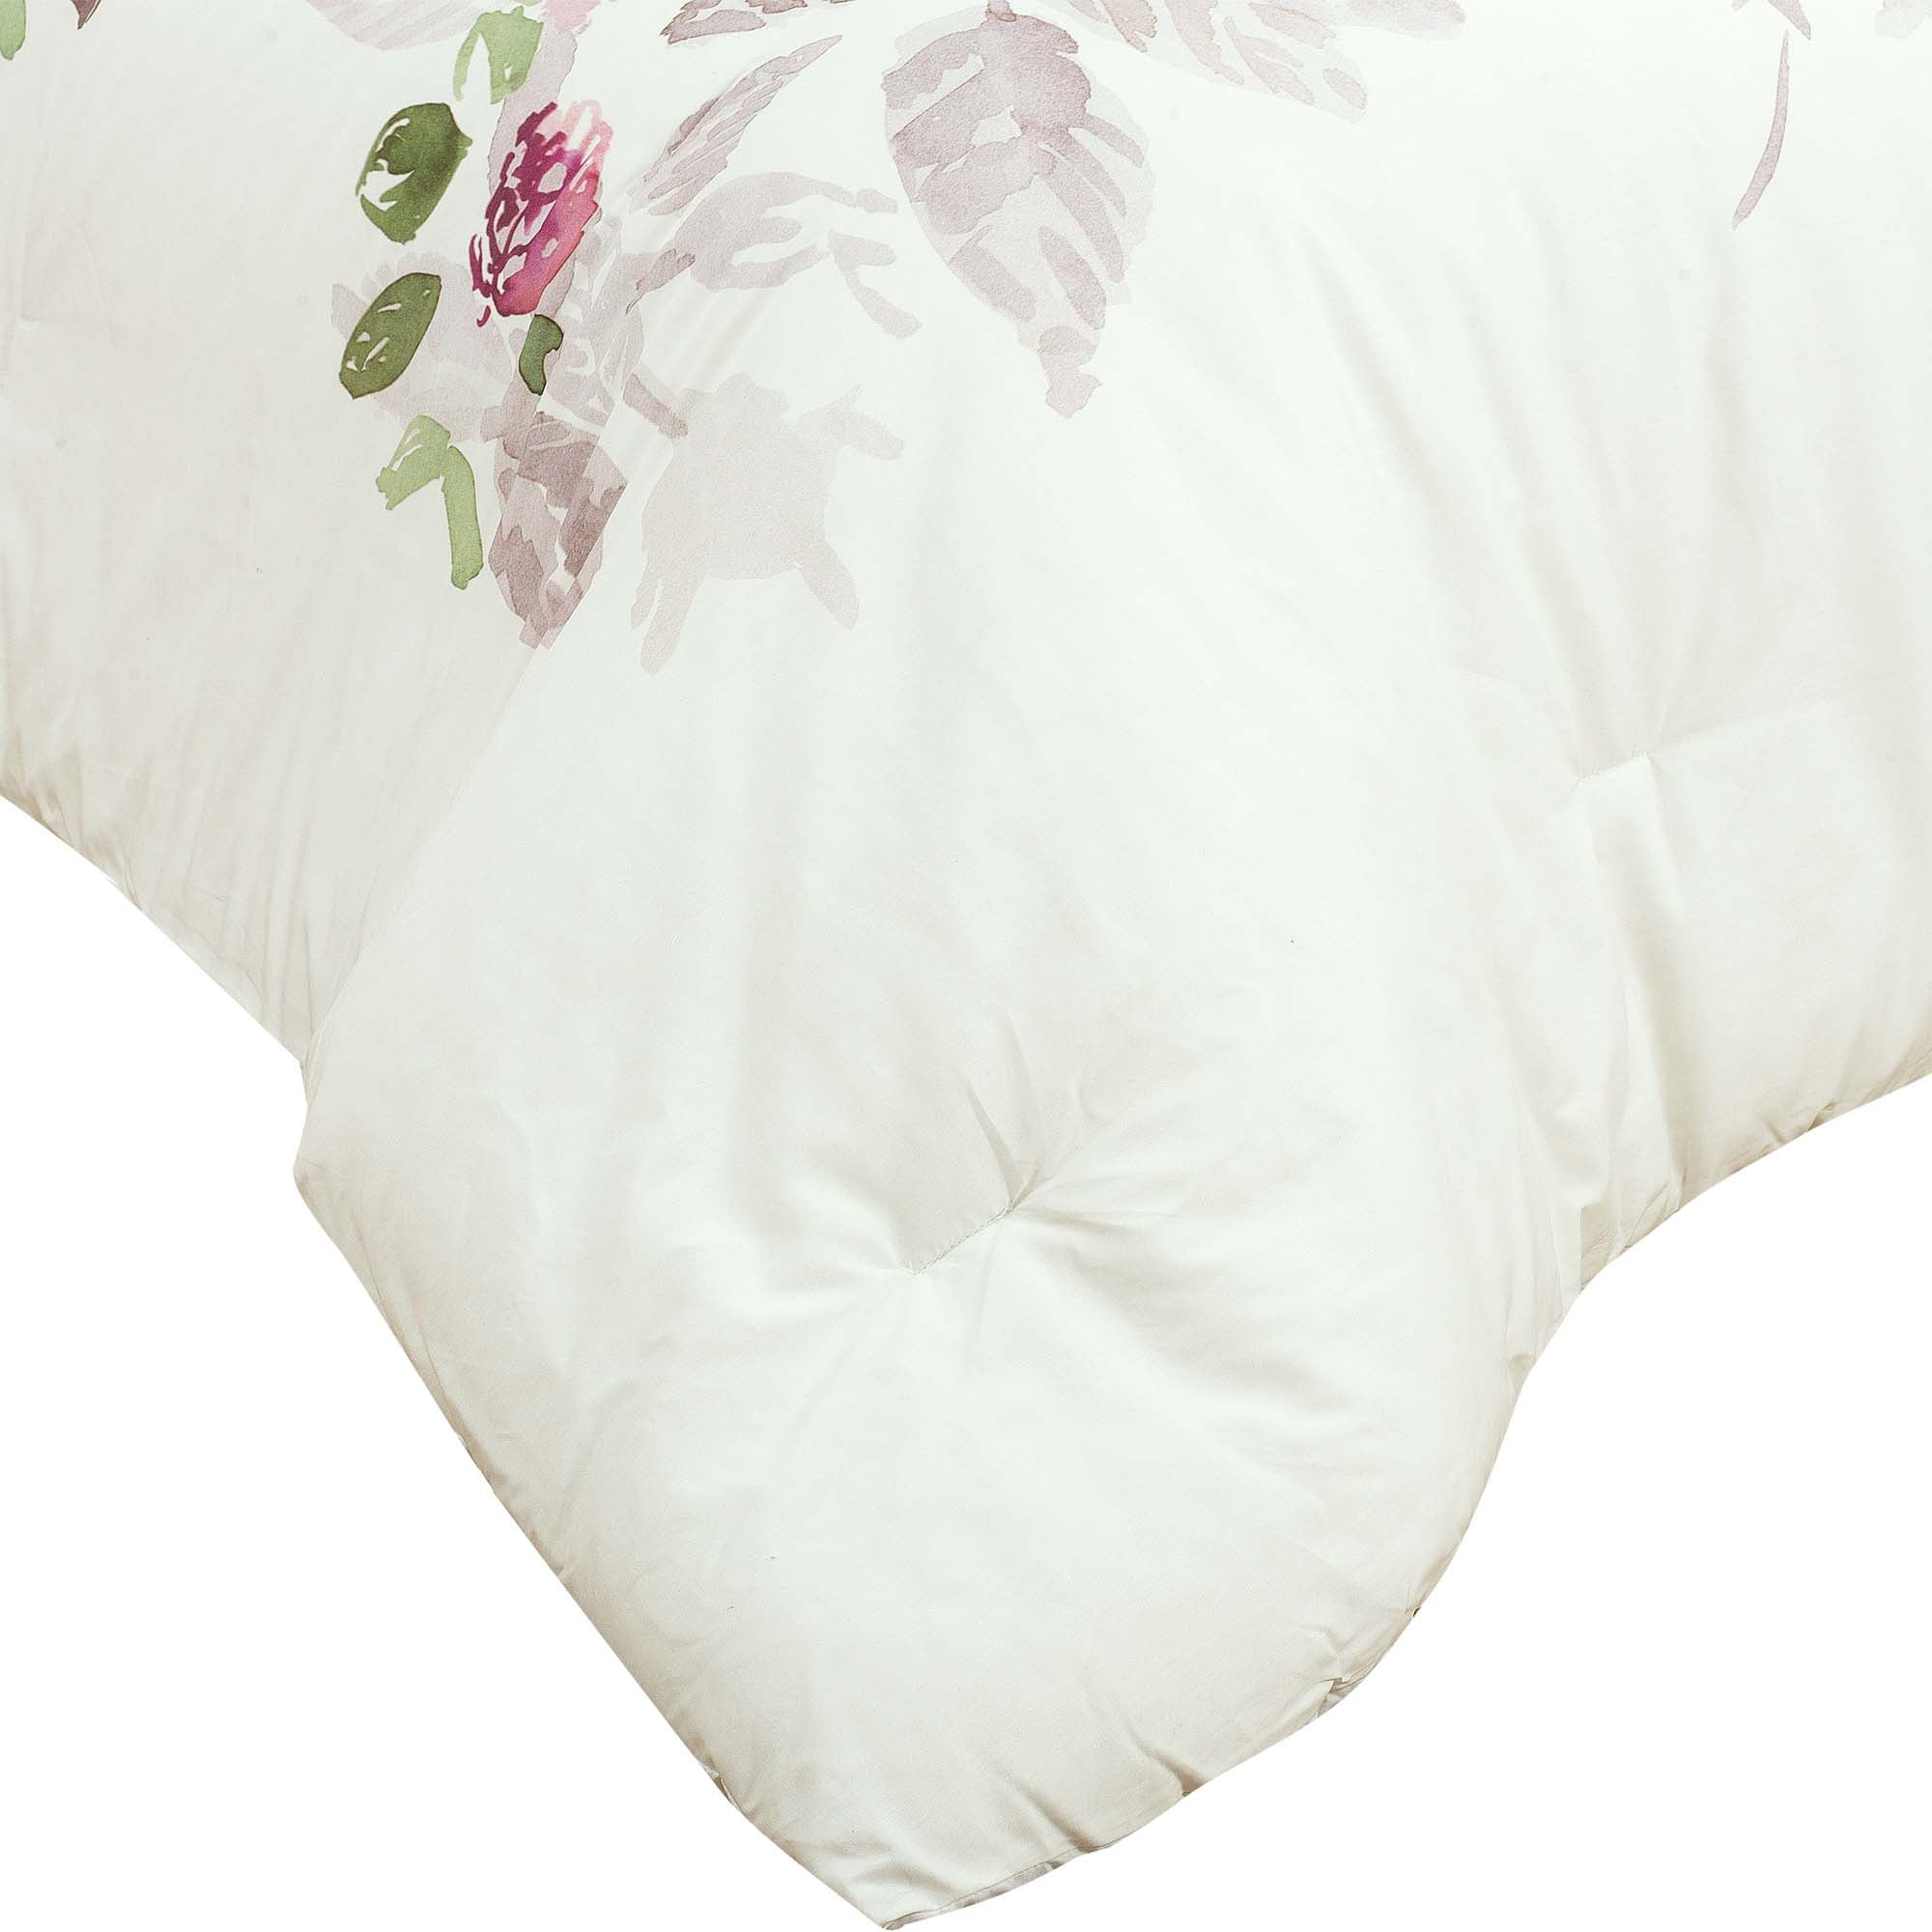 Hastings Home 811055CBS 3 Piece Floral Comforter Set - K